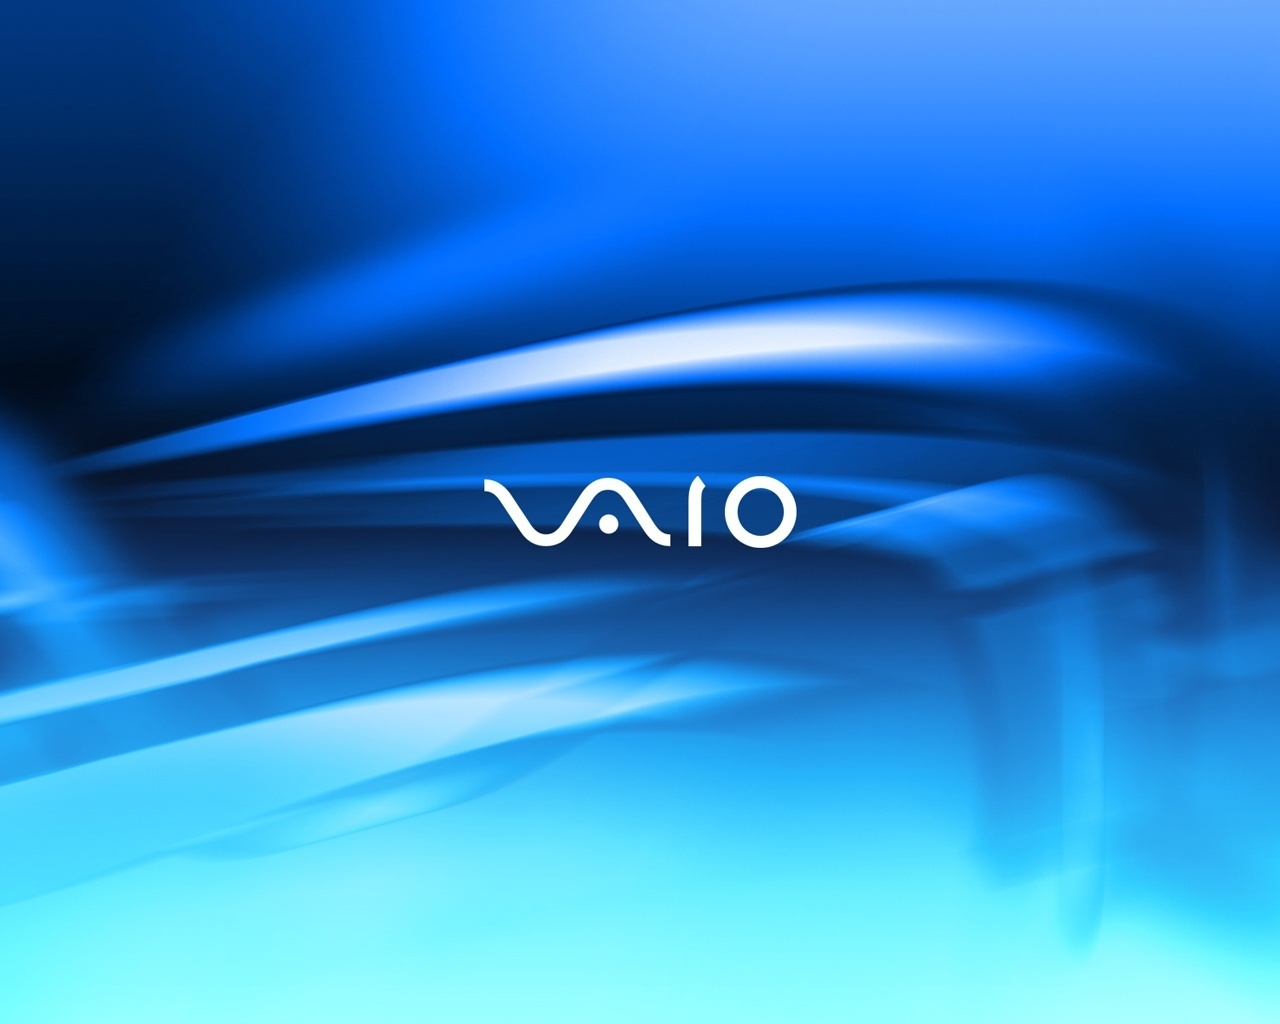 Vaio light blue for 1280 x 1024 resolution